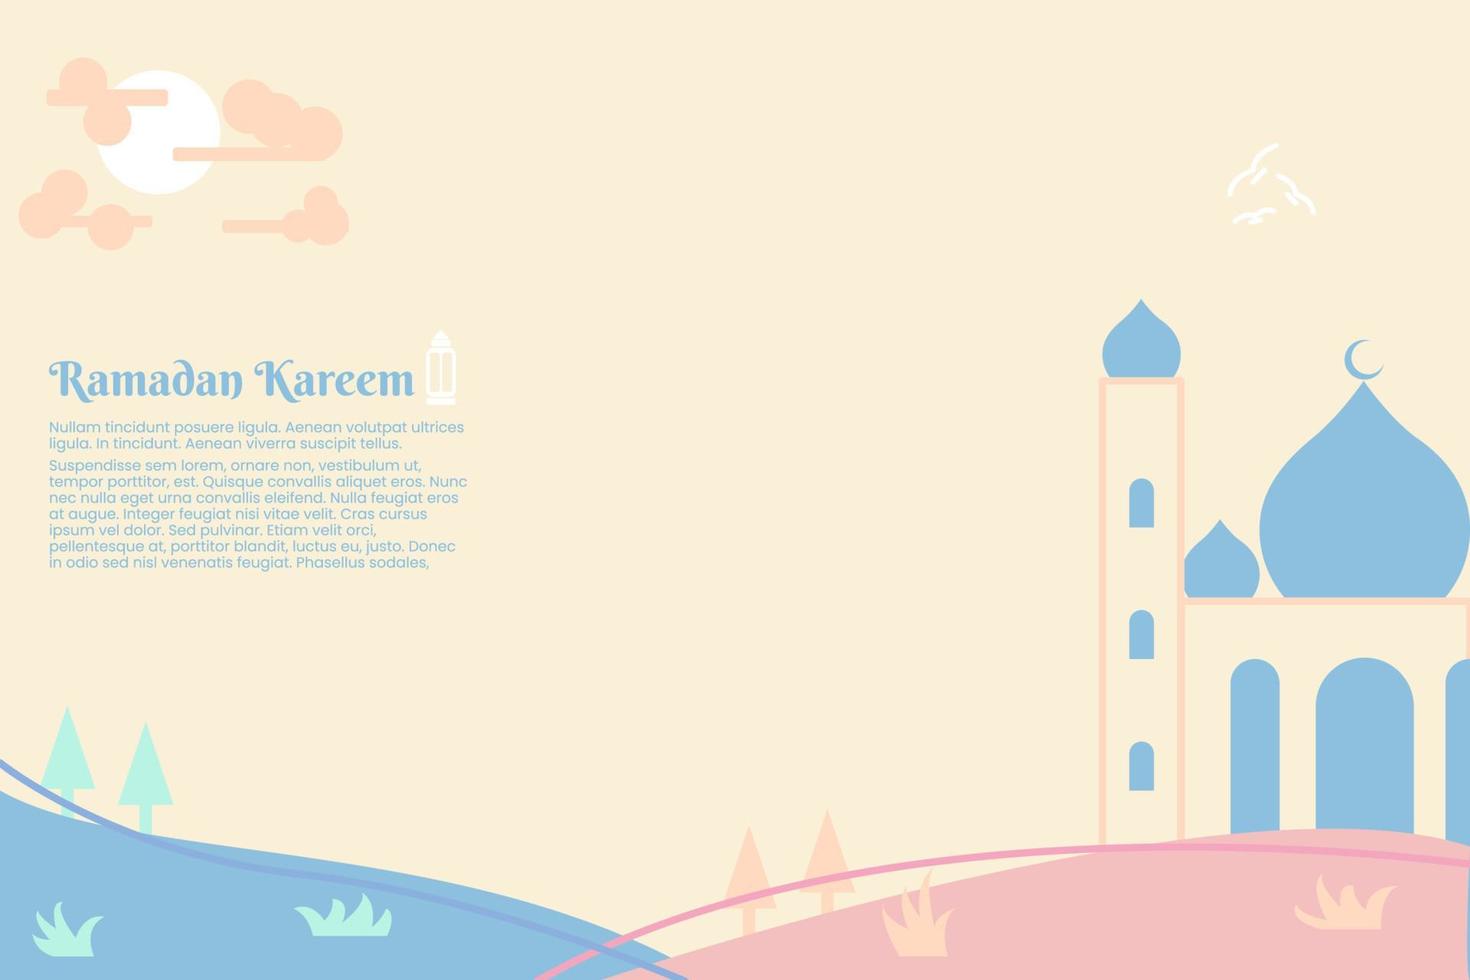 Ramadan kareem, Eid Mubarak, Islamic holiday vector illustration with attractive colors